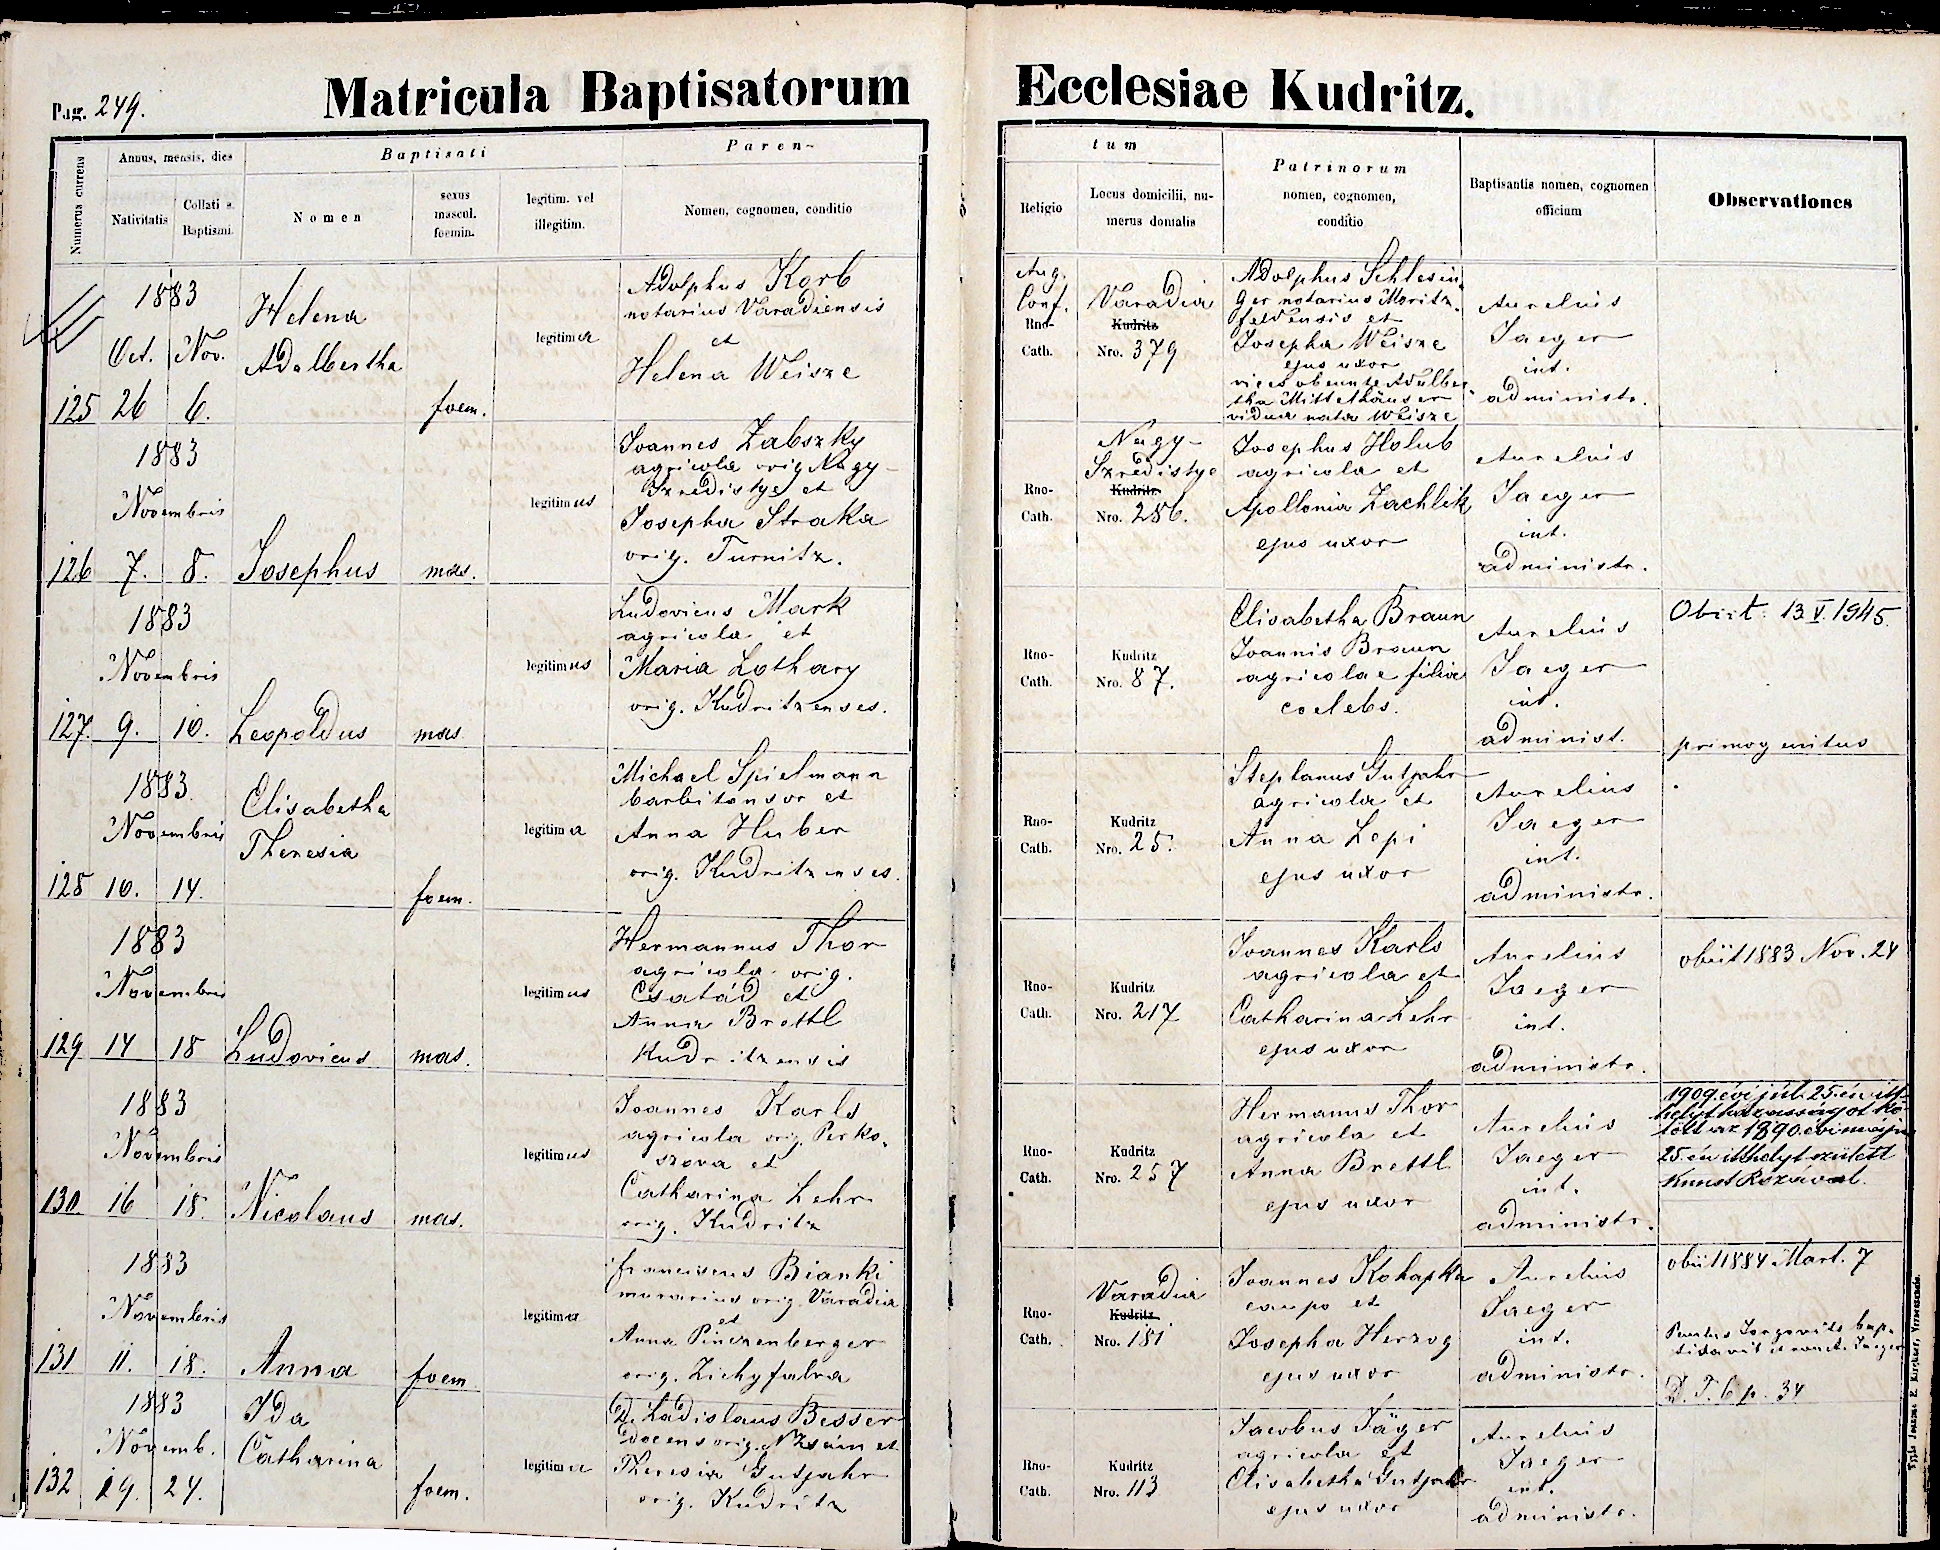 images/church_records/BIRTHS/1880-1883B/1883/249